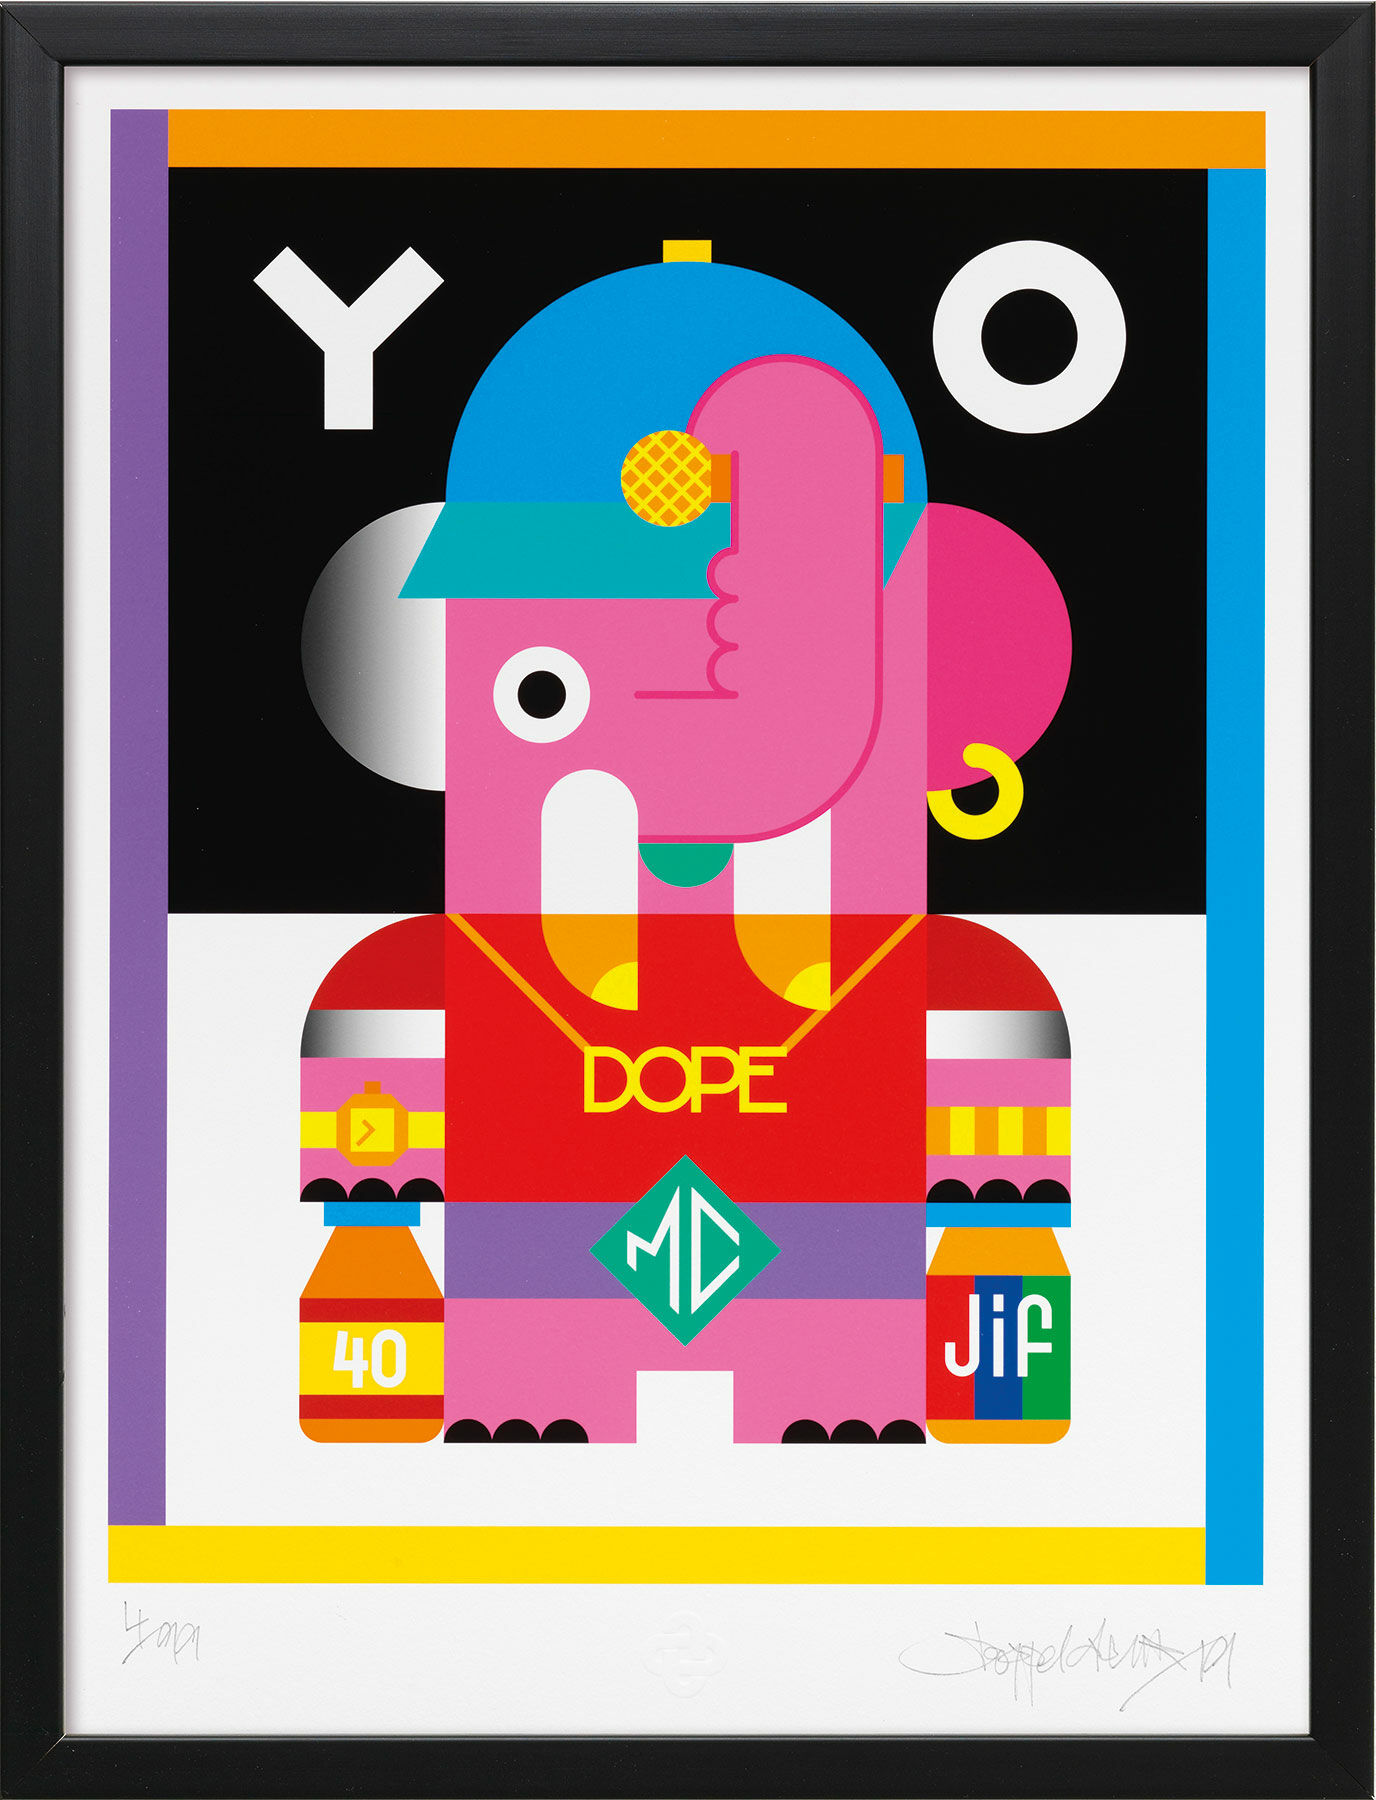 Picture "YO", black framed version by Doppeldenk